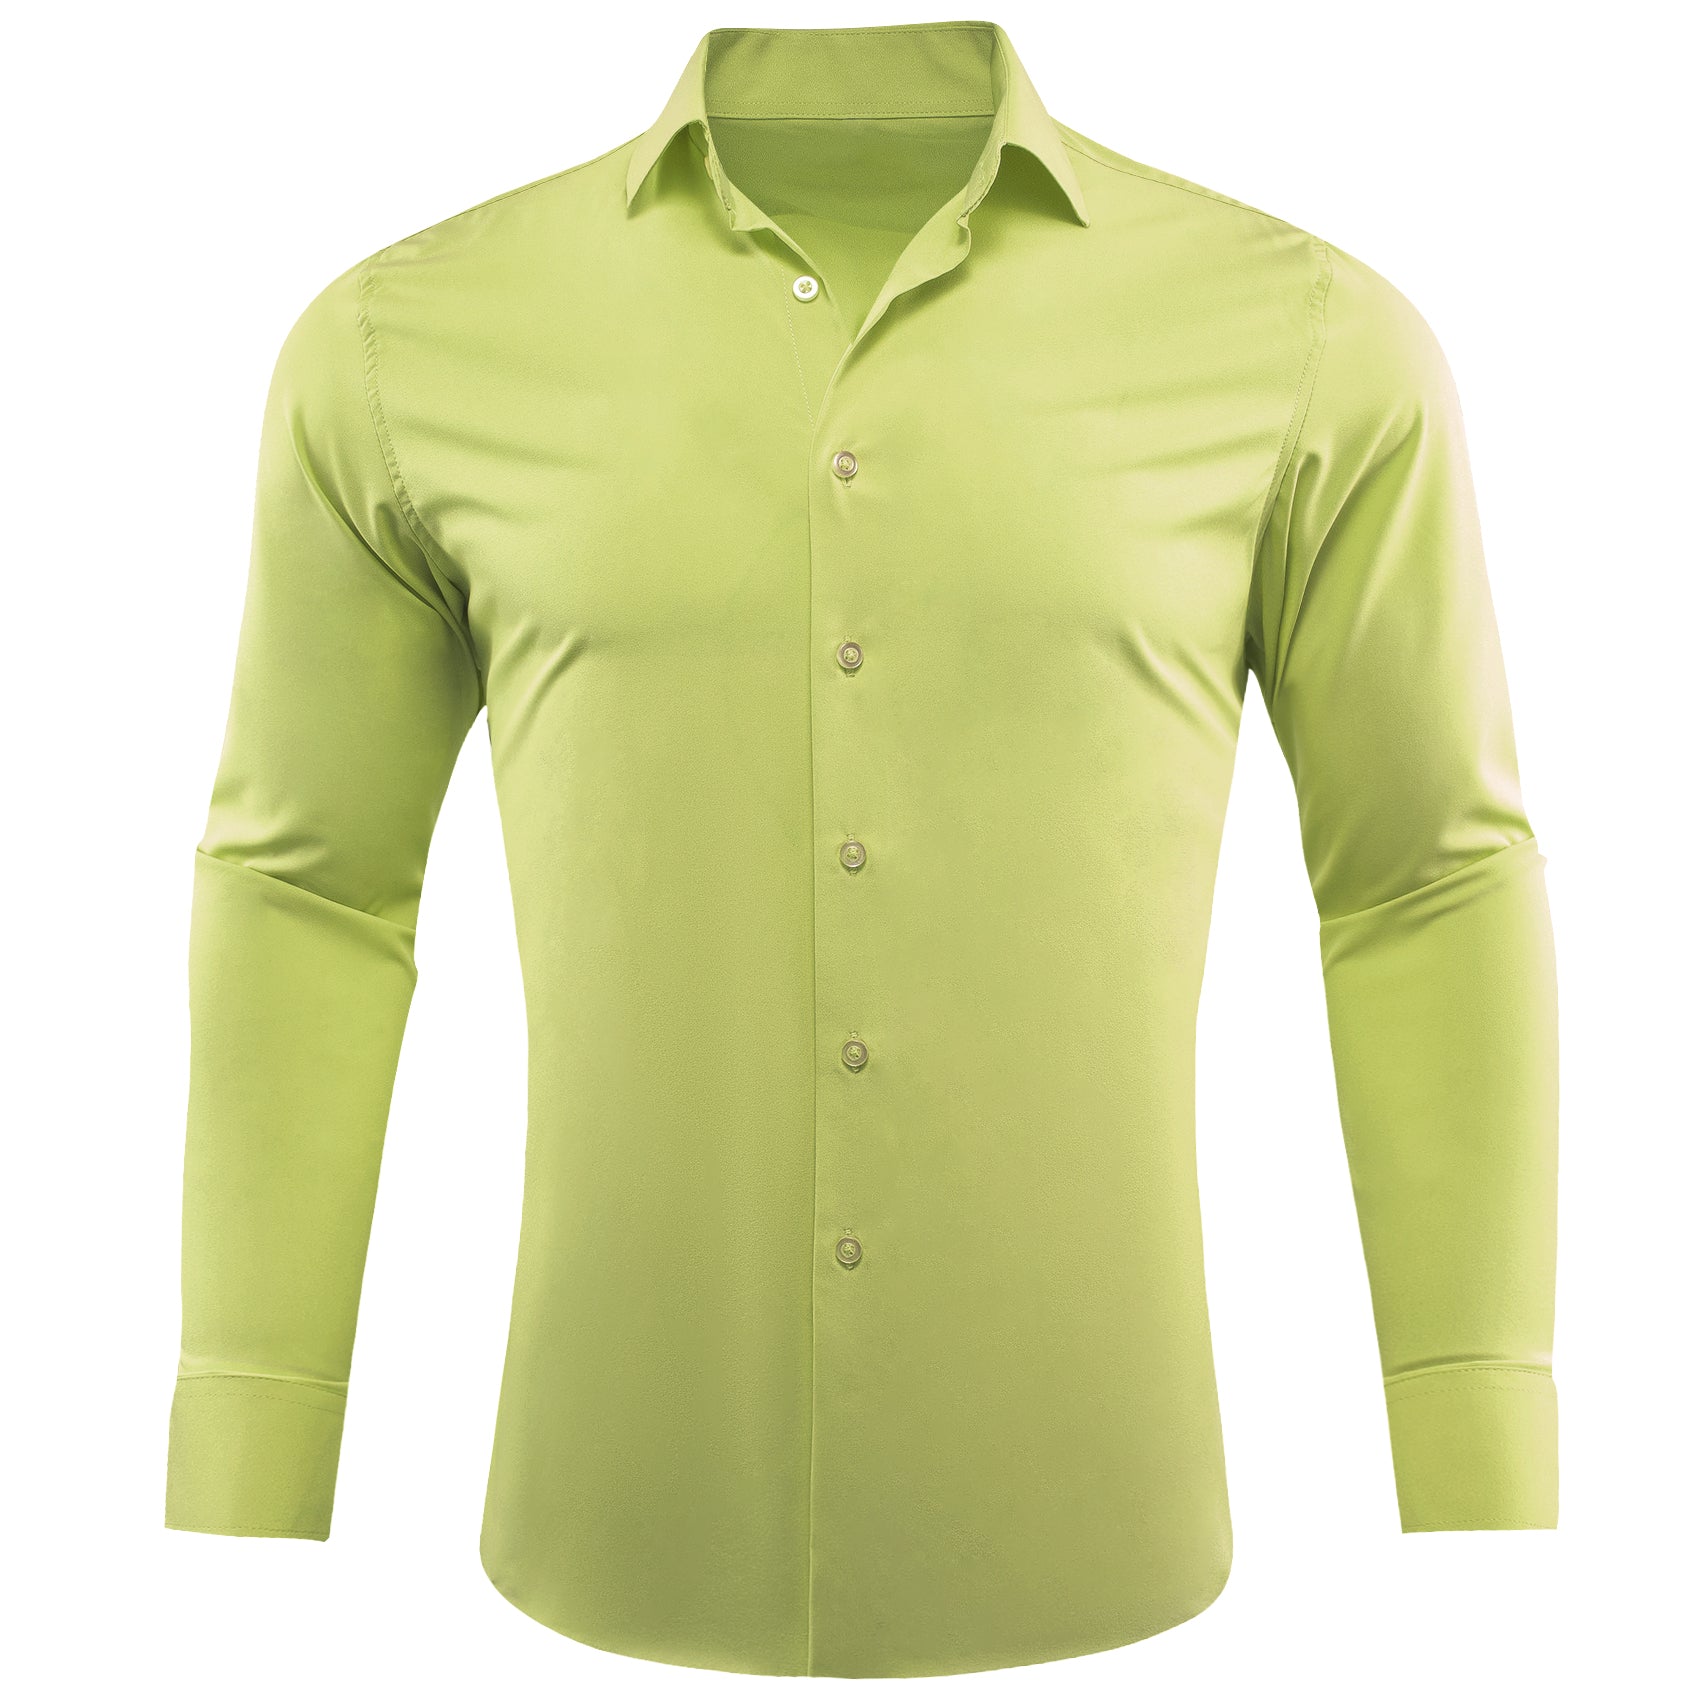 Barry.wang Yellow Green Solid Silk Shirt